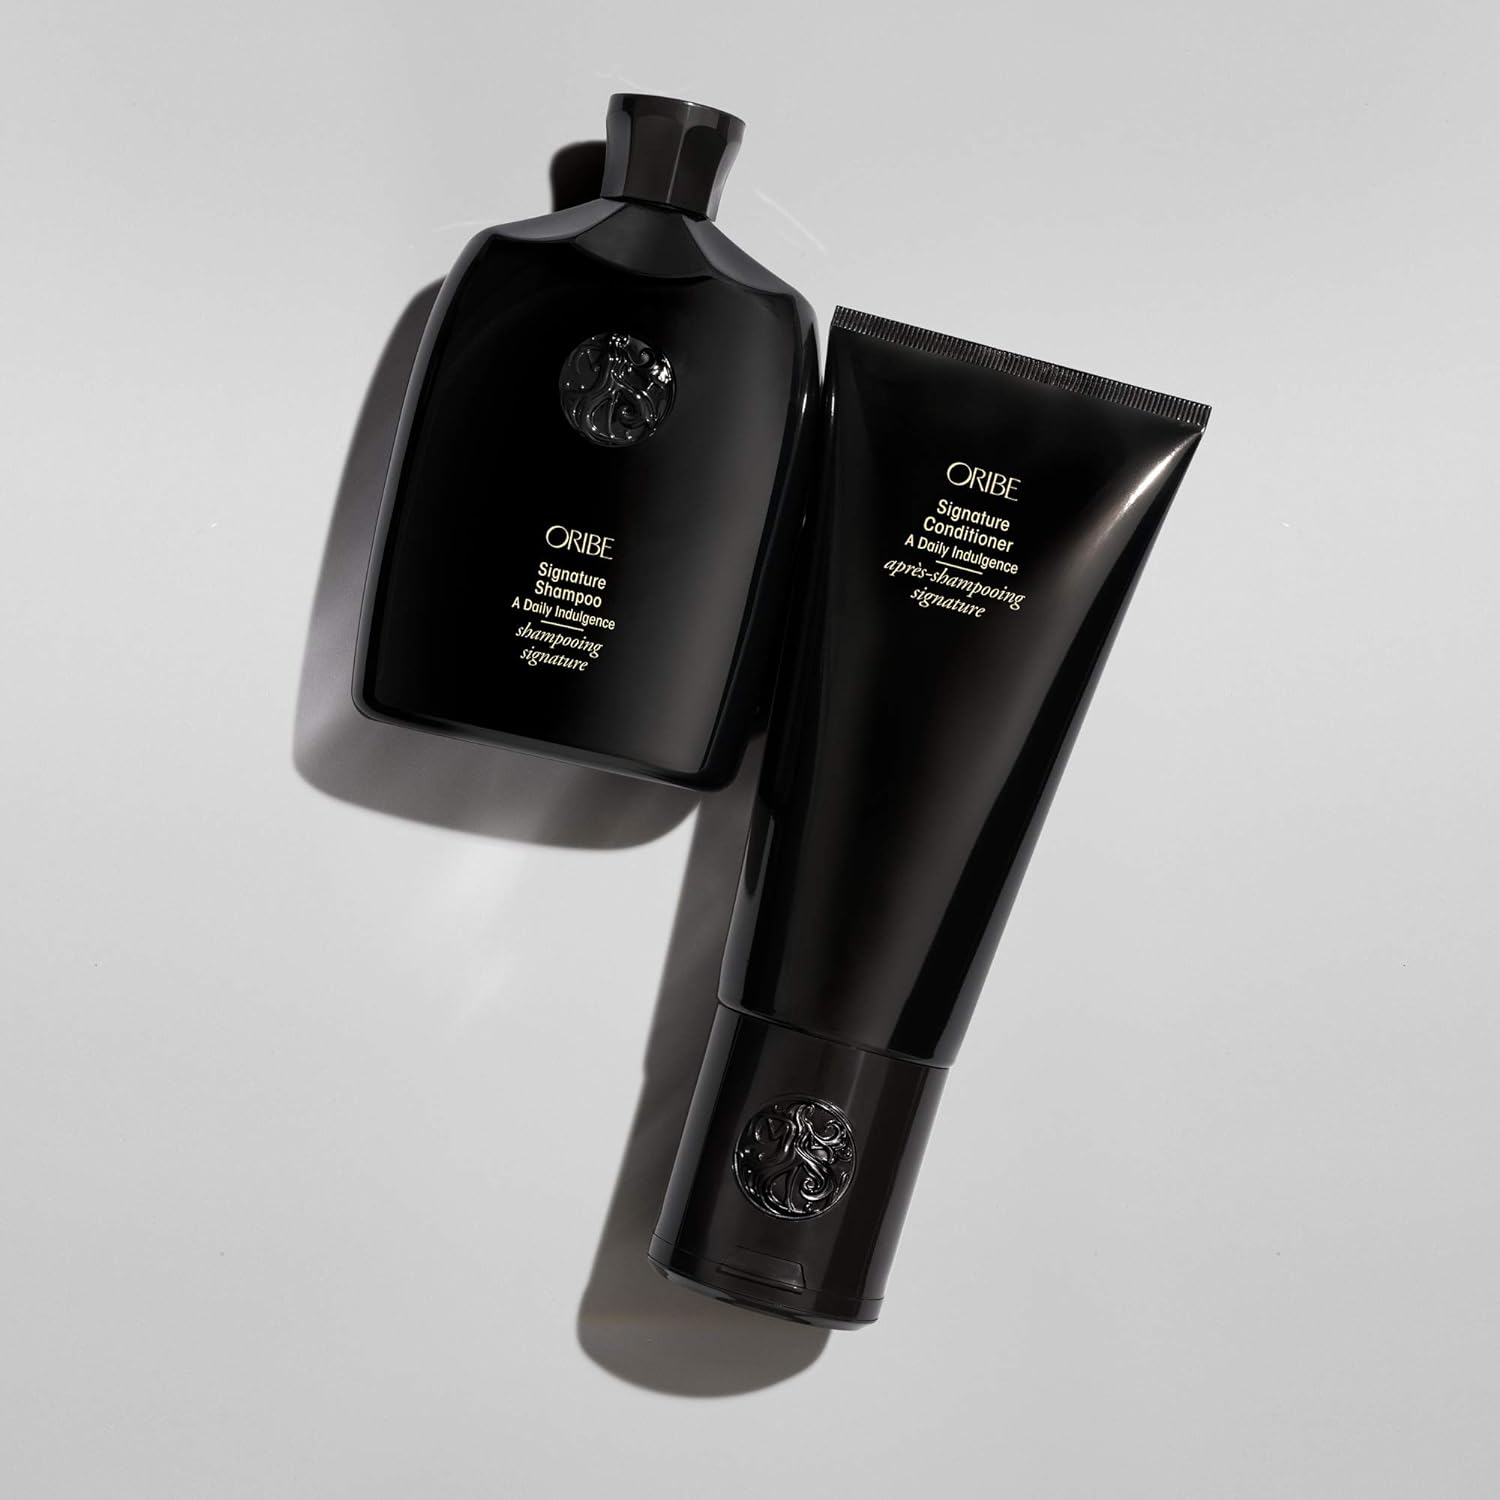 Buy Oribe Signature Shampoo, 8.5 oz on Amazon.com ? FREE SHIPPING on qualified orders